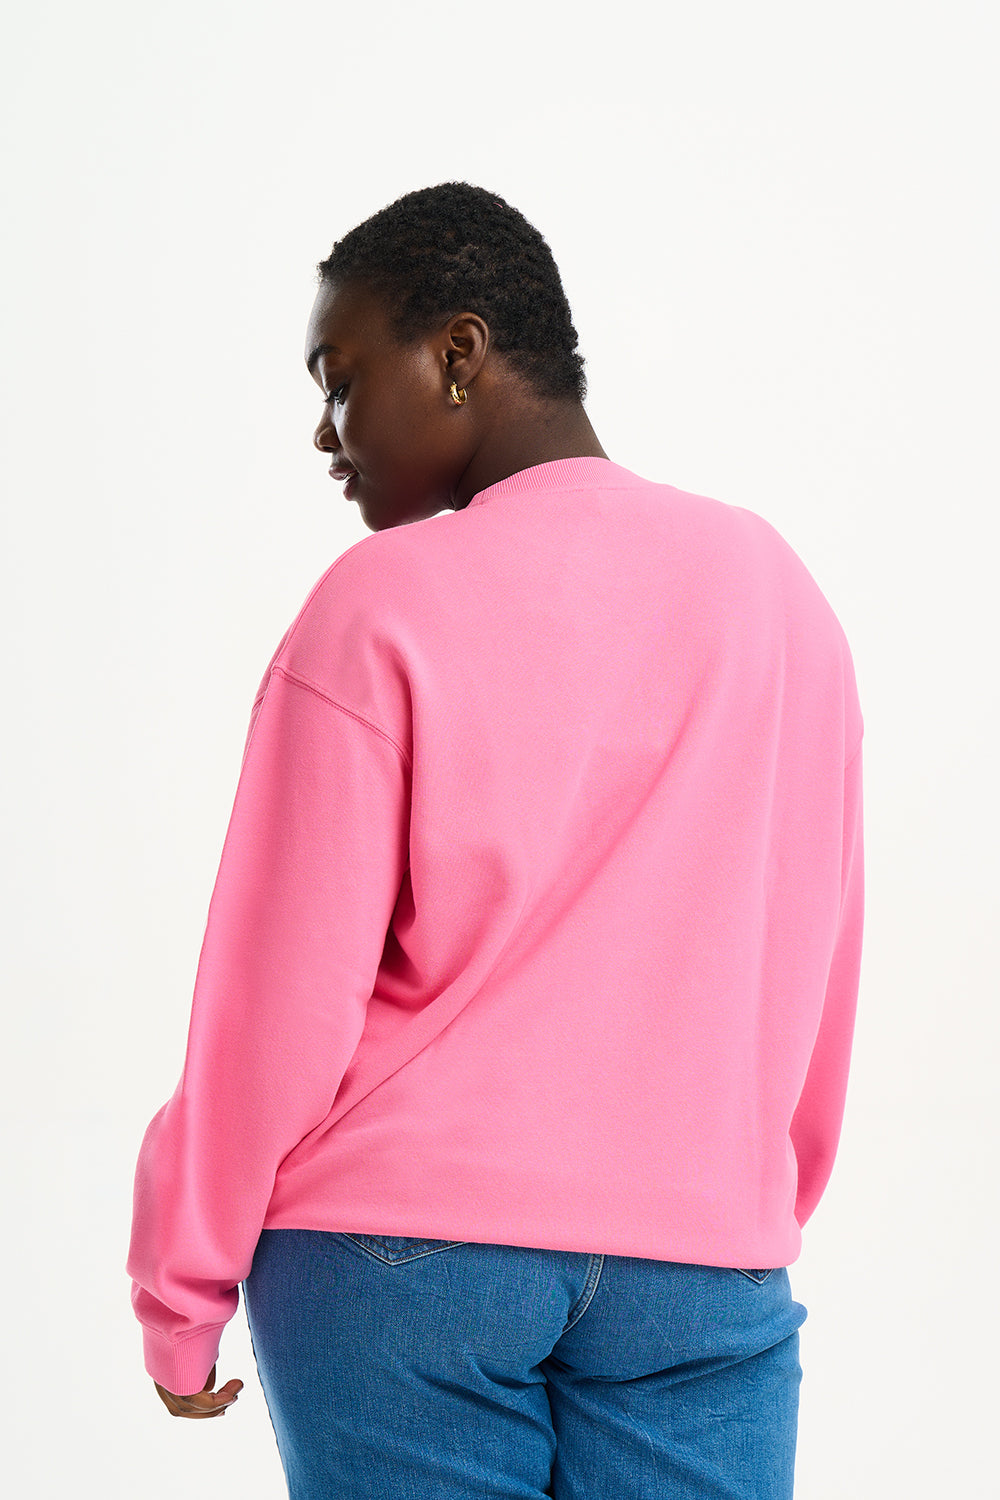 Sugarhill Brighton - Noah Shark Embroidery Pink Sweatshirt